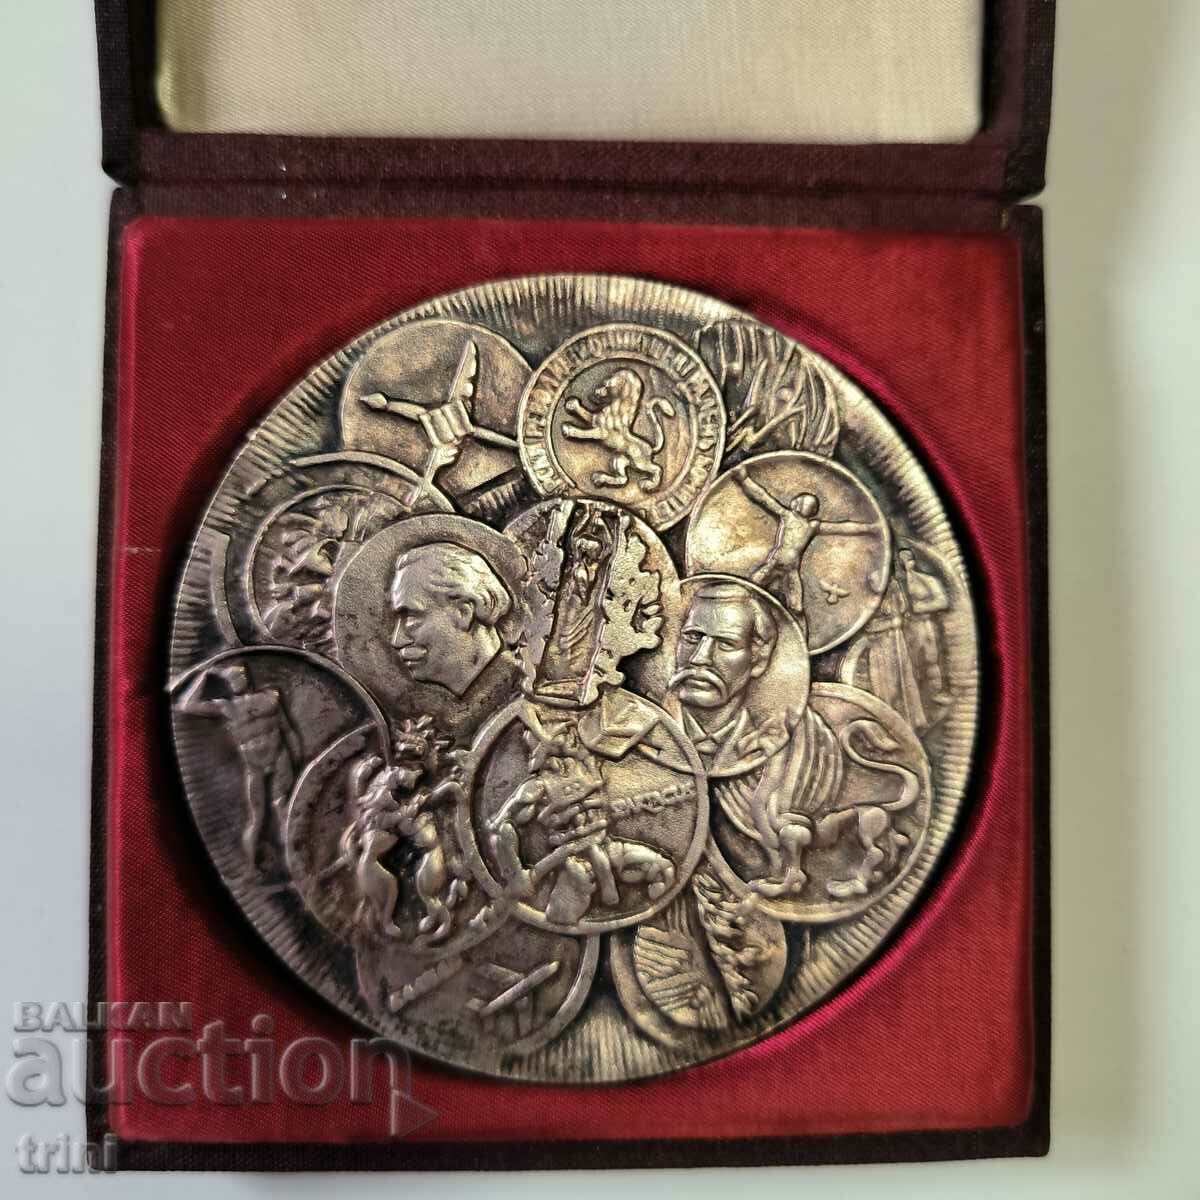 Настолен медал 25 години БЪЛГАРСКИ МОНЕТЕН ДВОР 1952 -1977 г